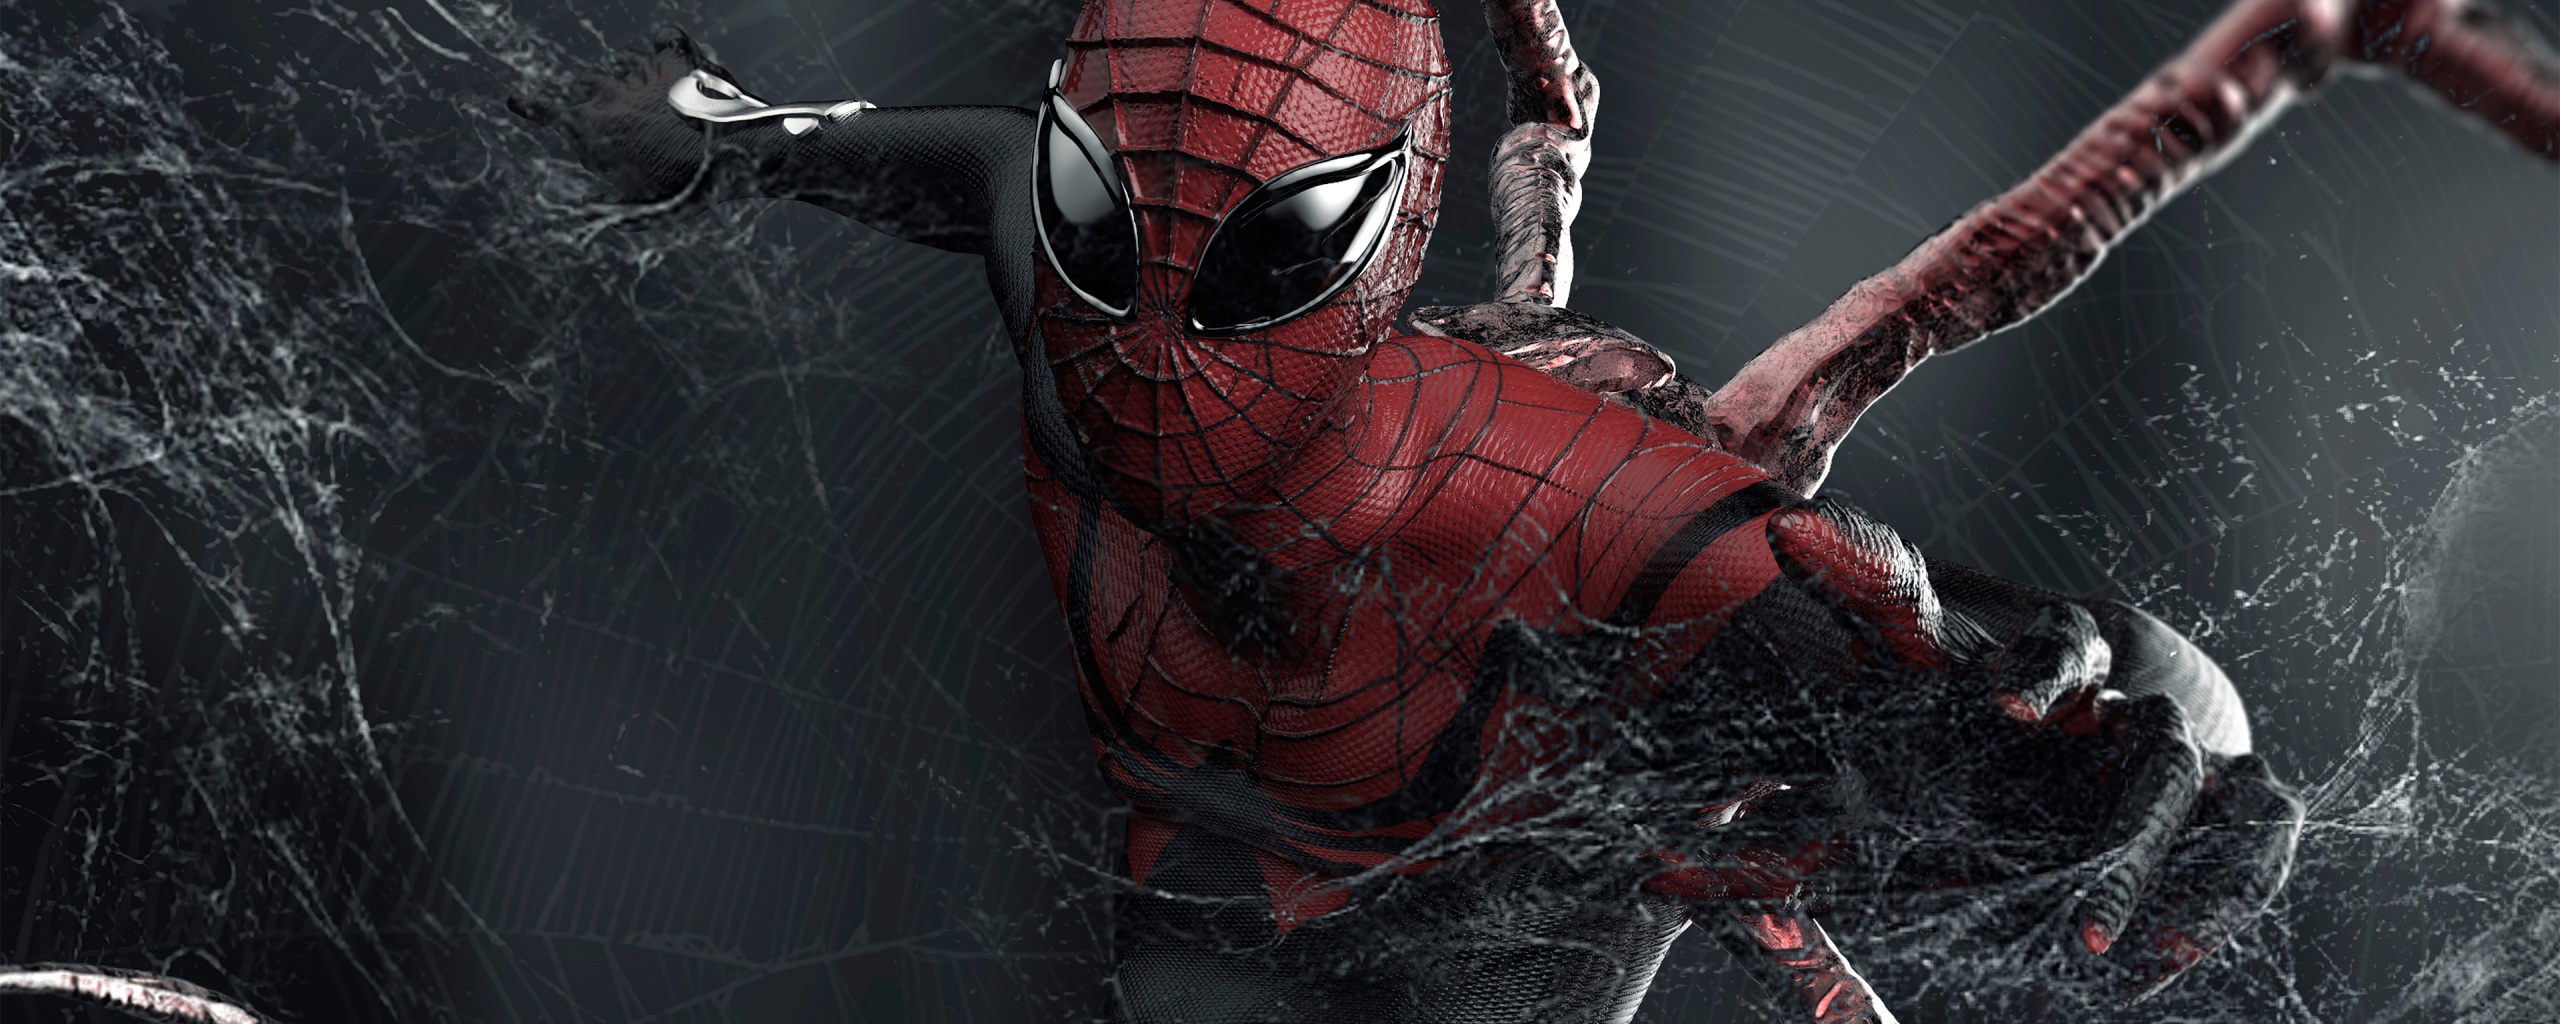 Superior Spider Man 4k - 4k Wallpapers - 40.000+ ipad wallpapers 4k ...